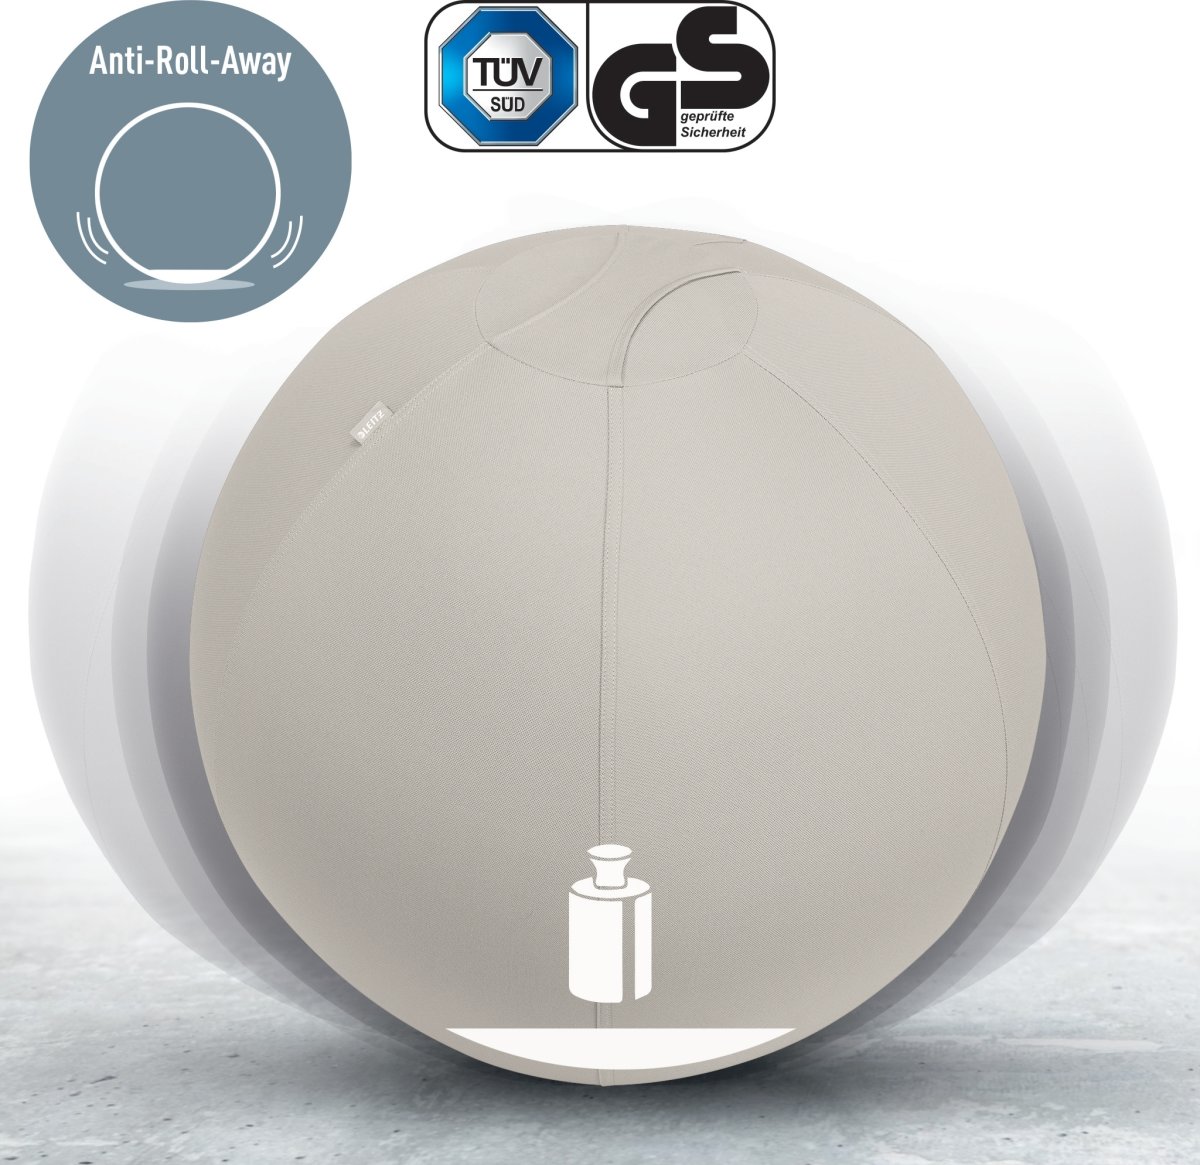 Leitz Ergo Active balansboll, grå, 75 cm